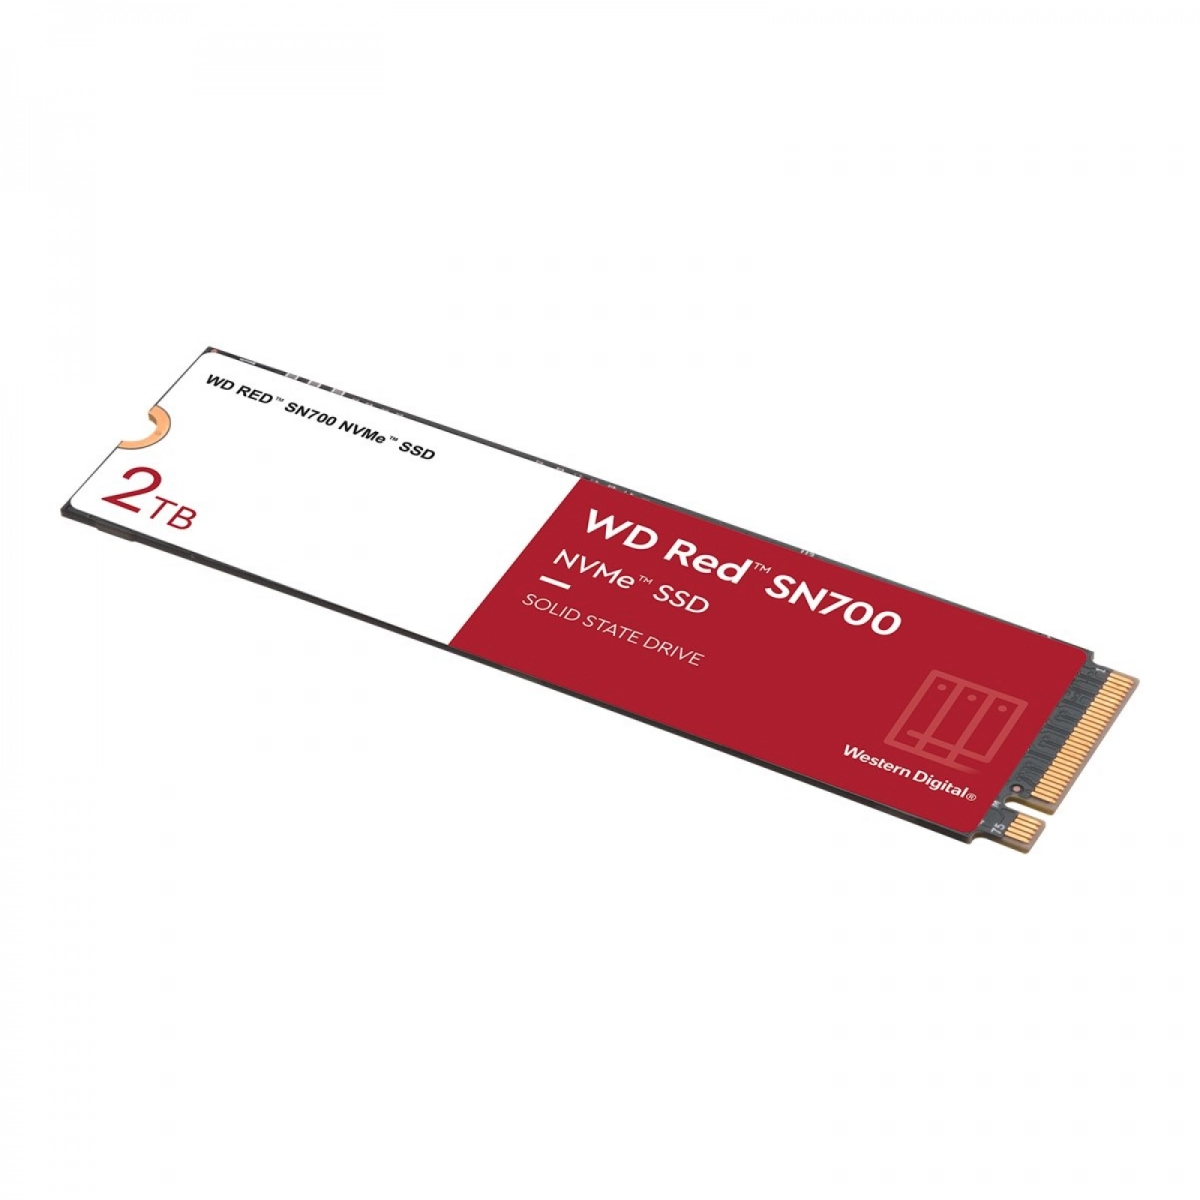 WD Red SN700 2TB NVMe SSD Fast PCIe 3.0 x4 (WDS200T1R0C)